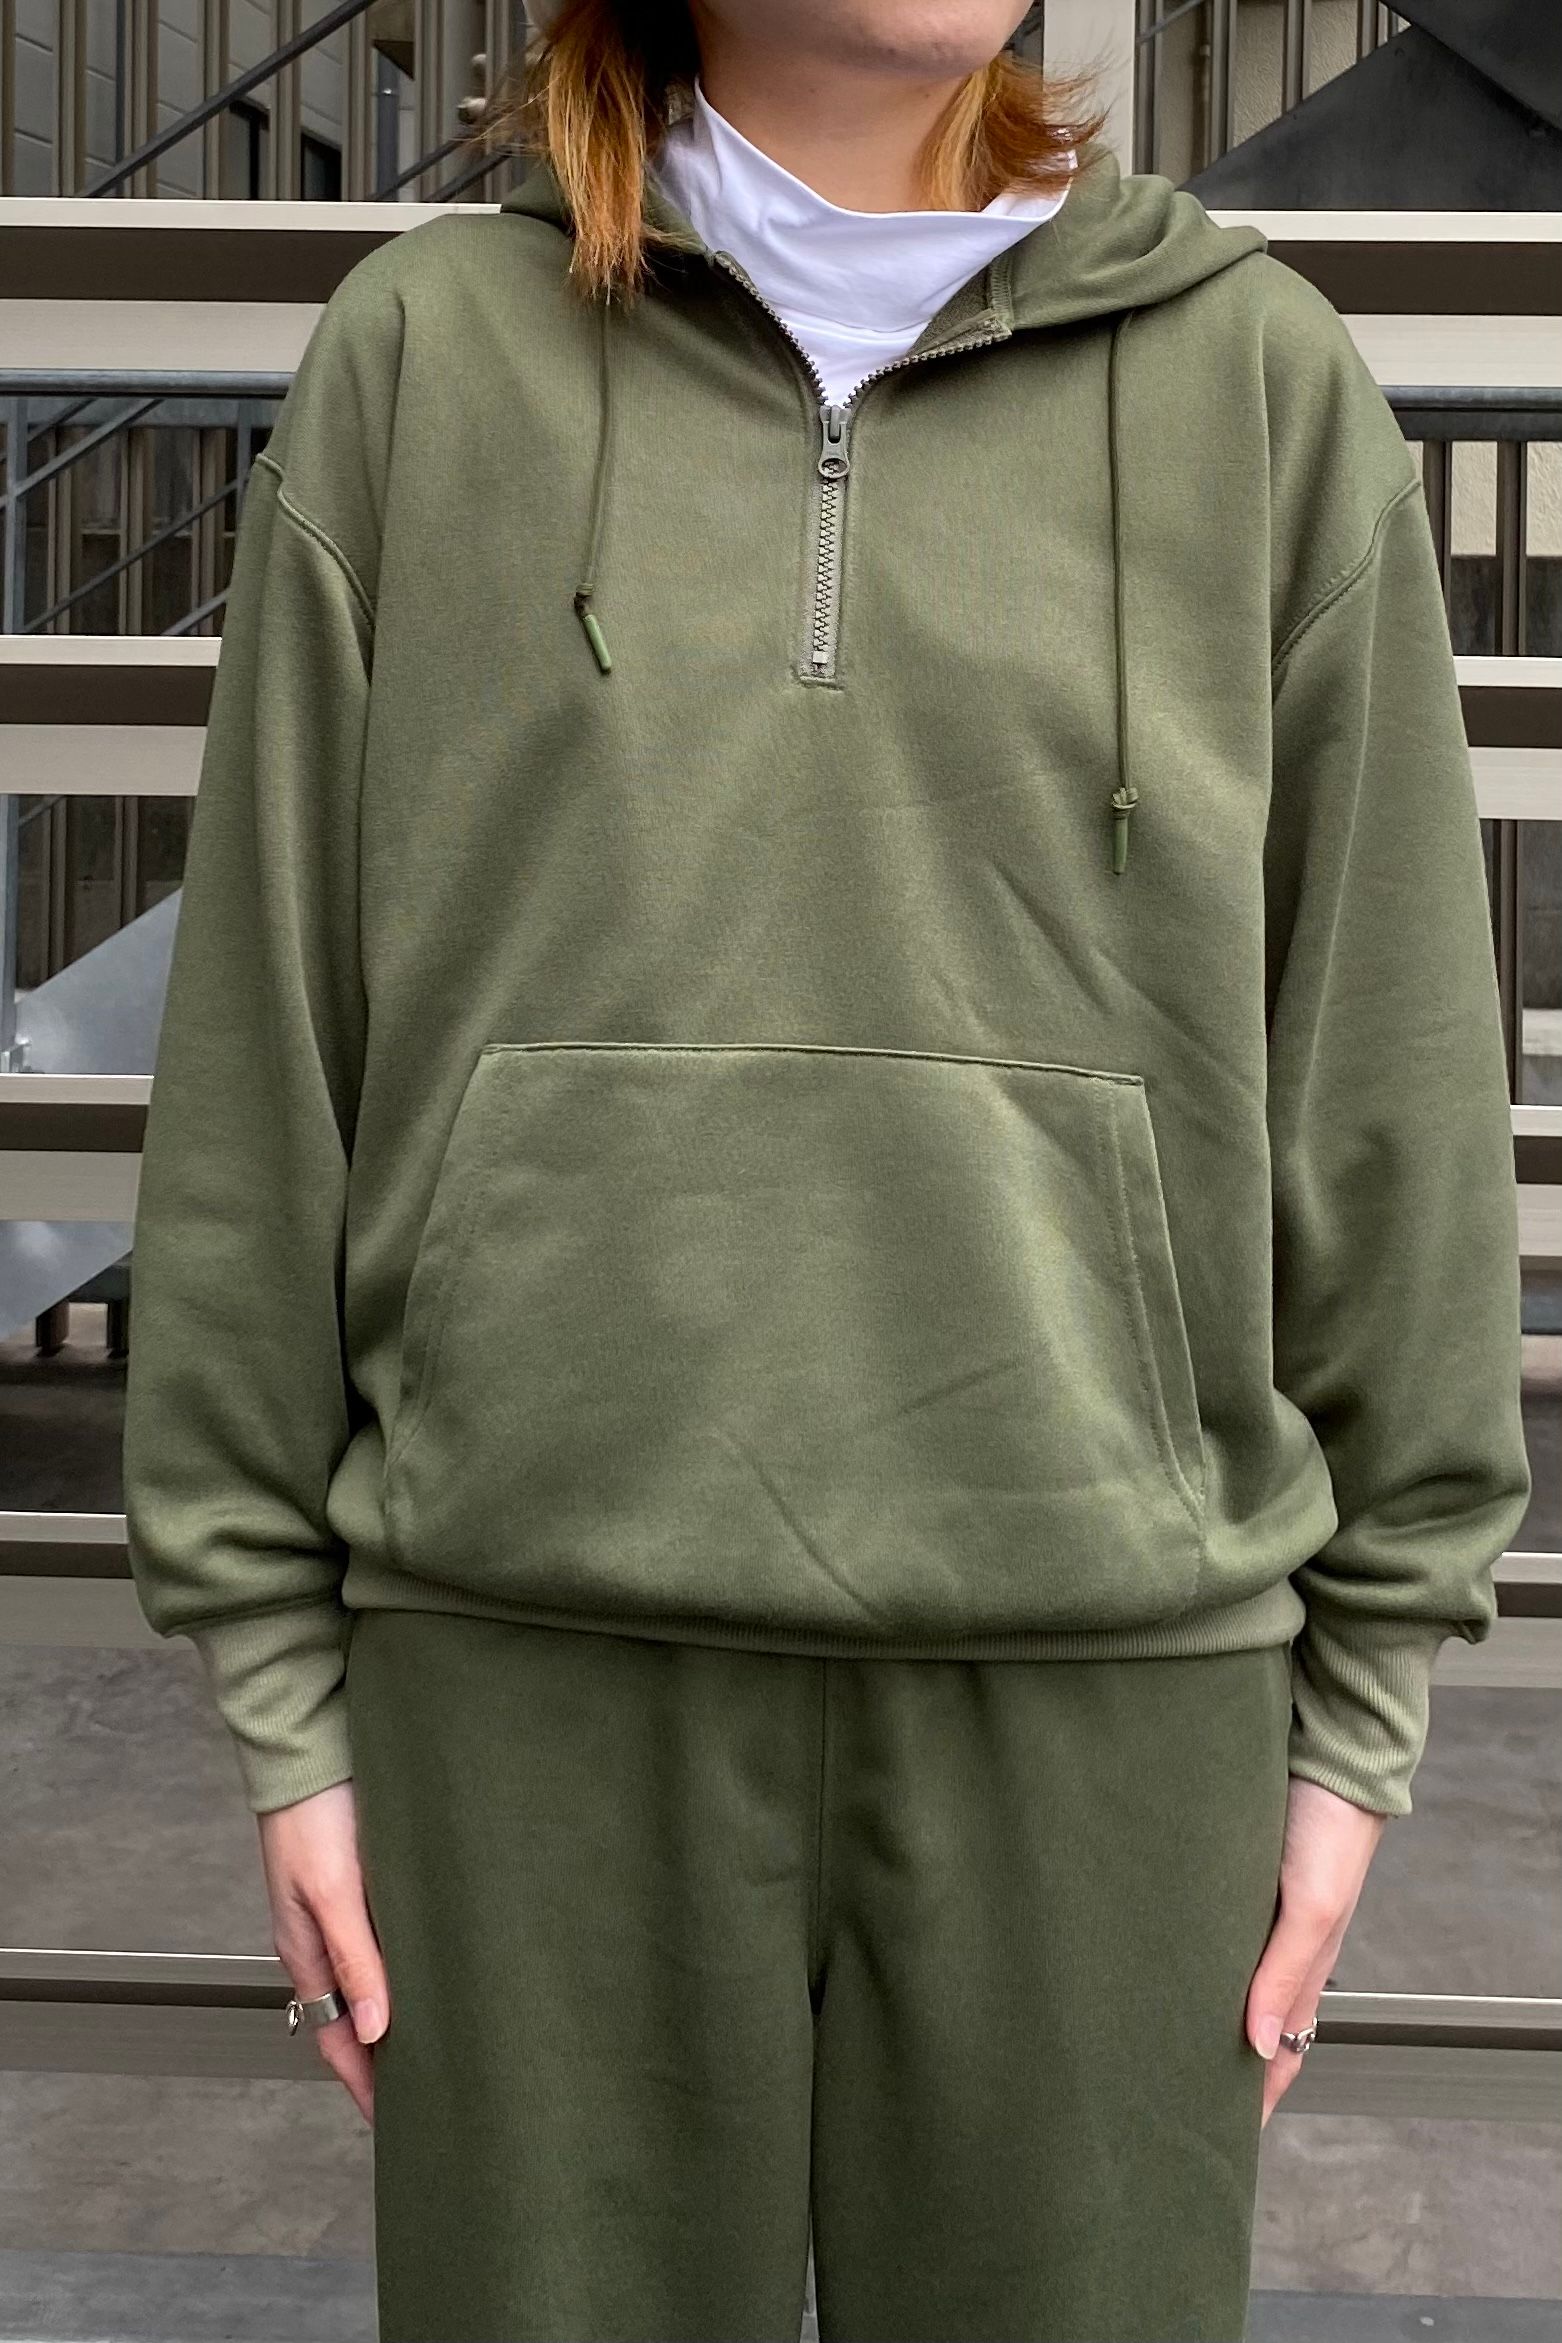 DAIWA PIER39 - women's tech sweat half zip hoodie -olive green 